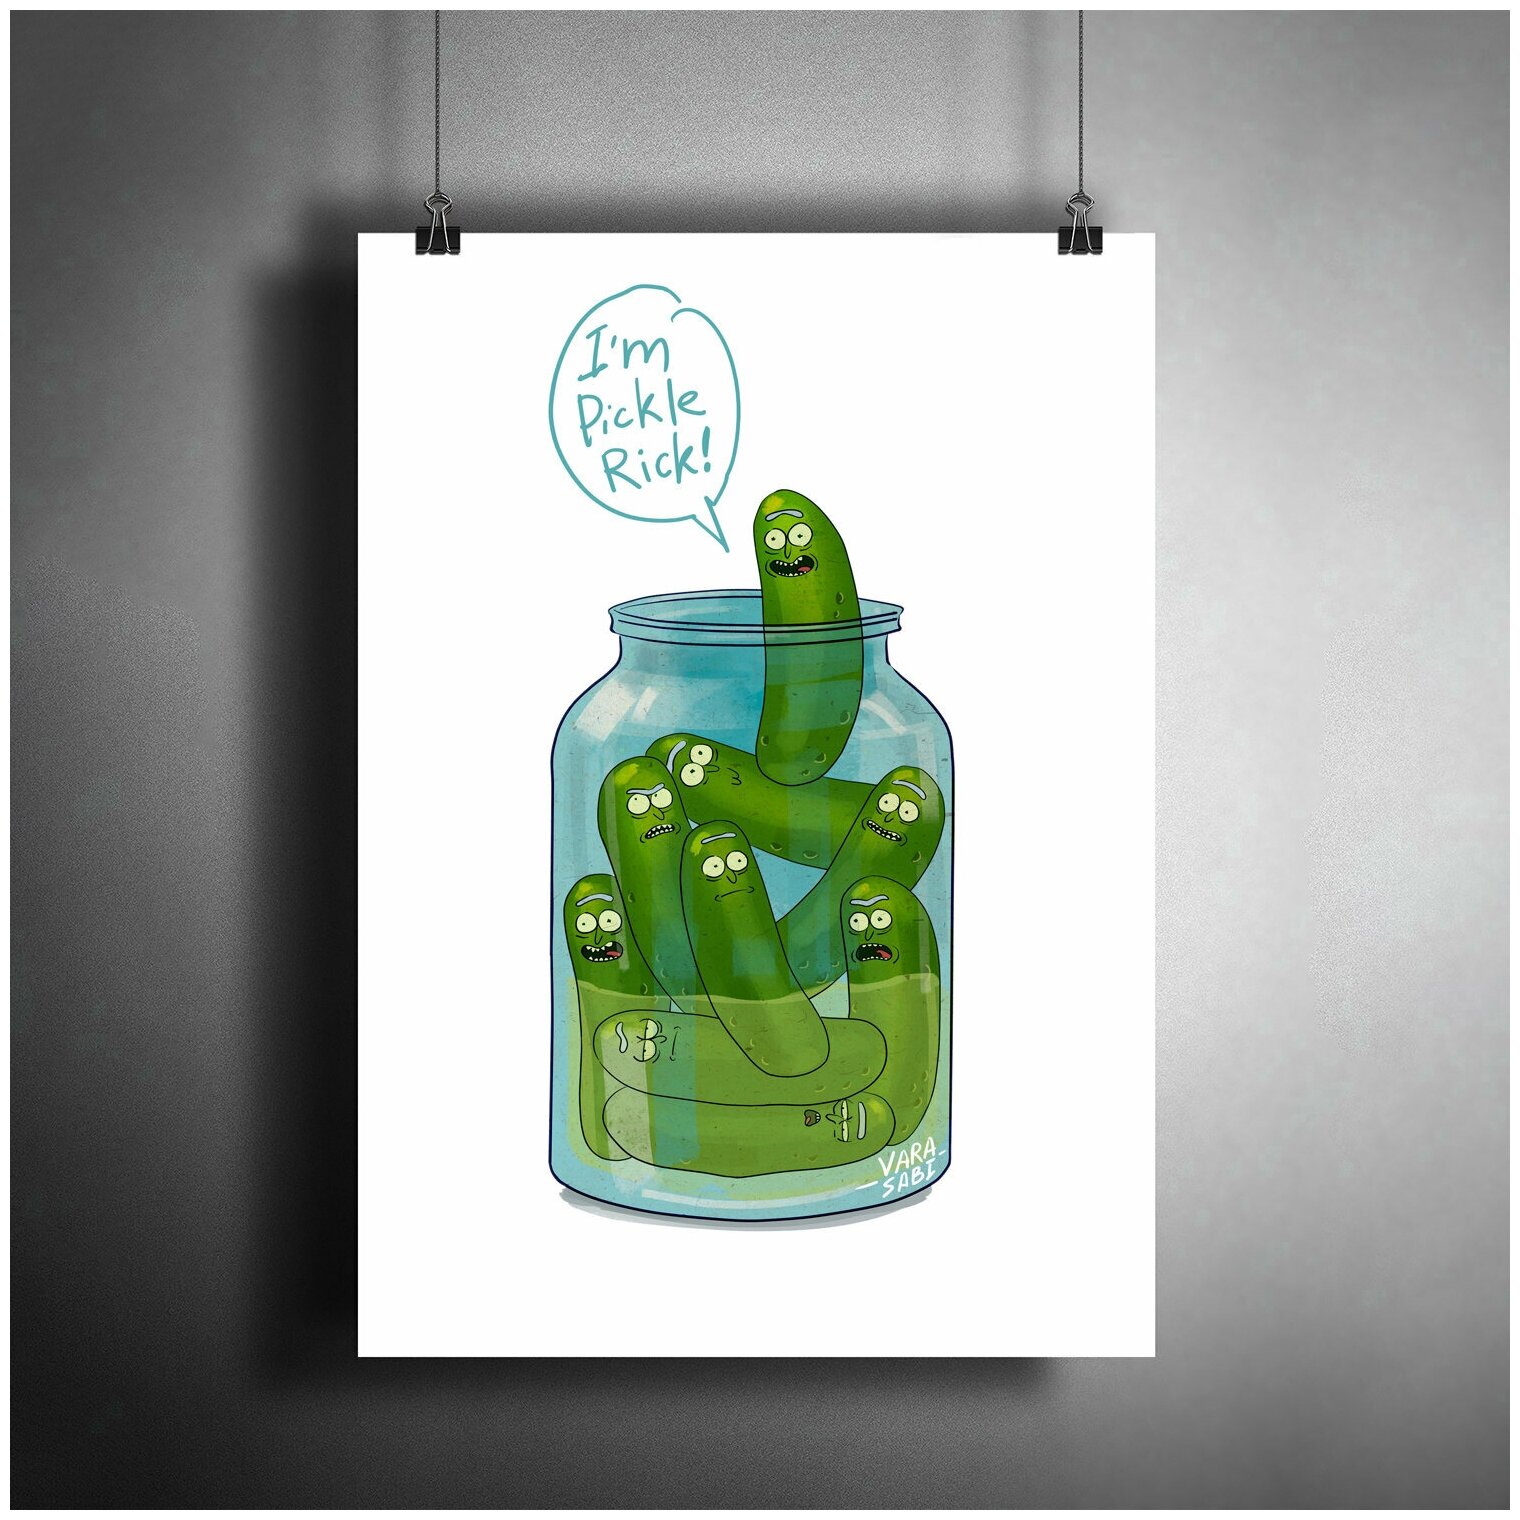 Постер плакат для интерьера "Мультсериал: Рик и Морти. Rick and Morty. Рик - огурчик" / Декор дома, офиса, комнаты, квартиры A3 (297 x 420 мм)